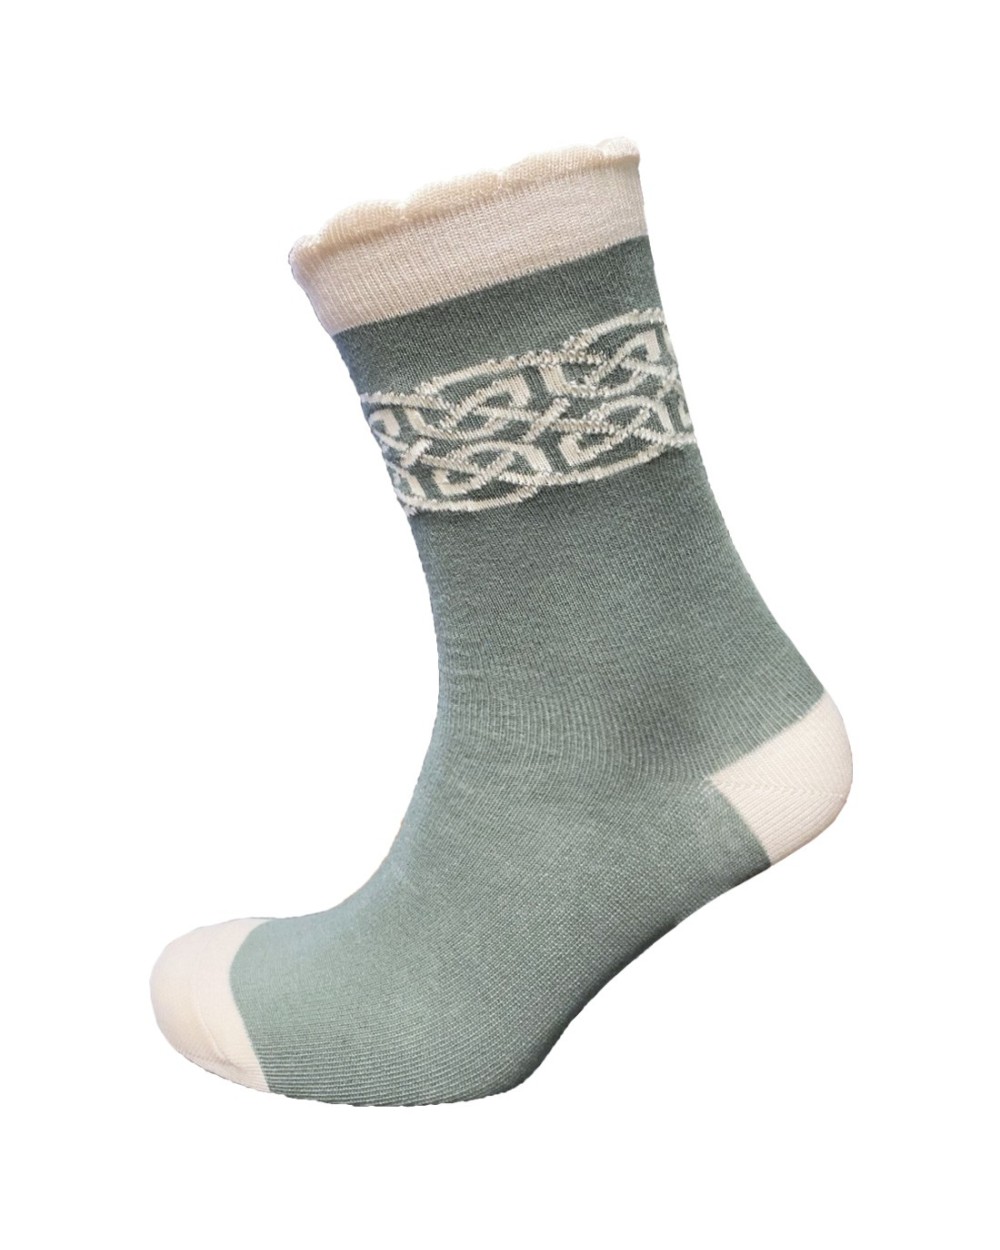 BK Celtic Knot Ladies Socks in Thyme & Cream